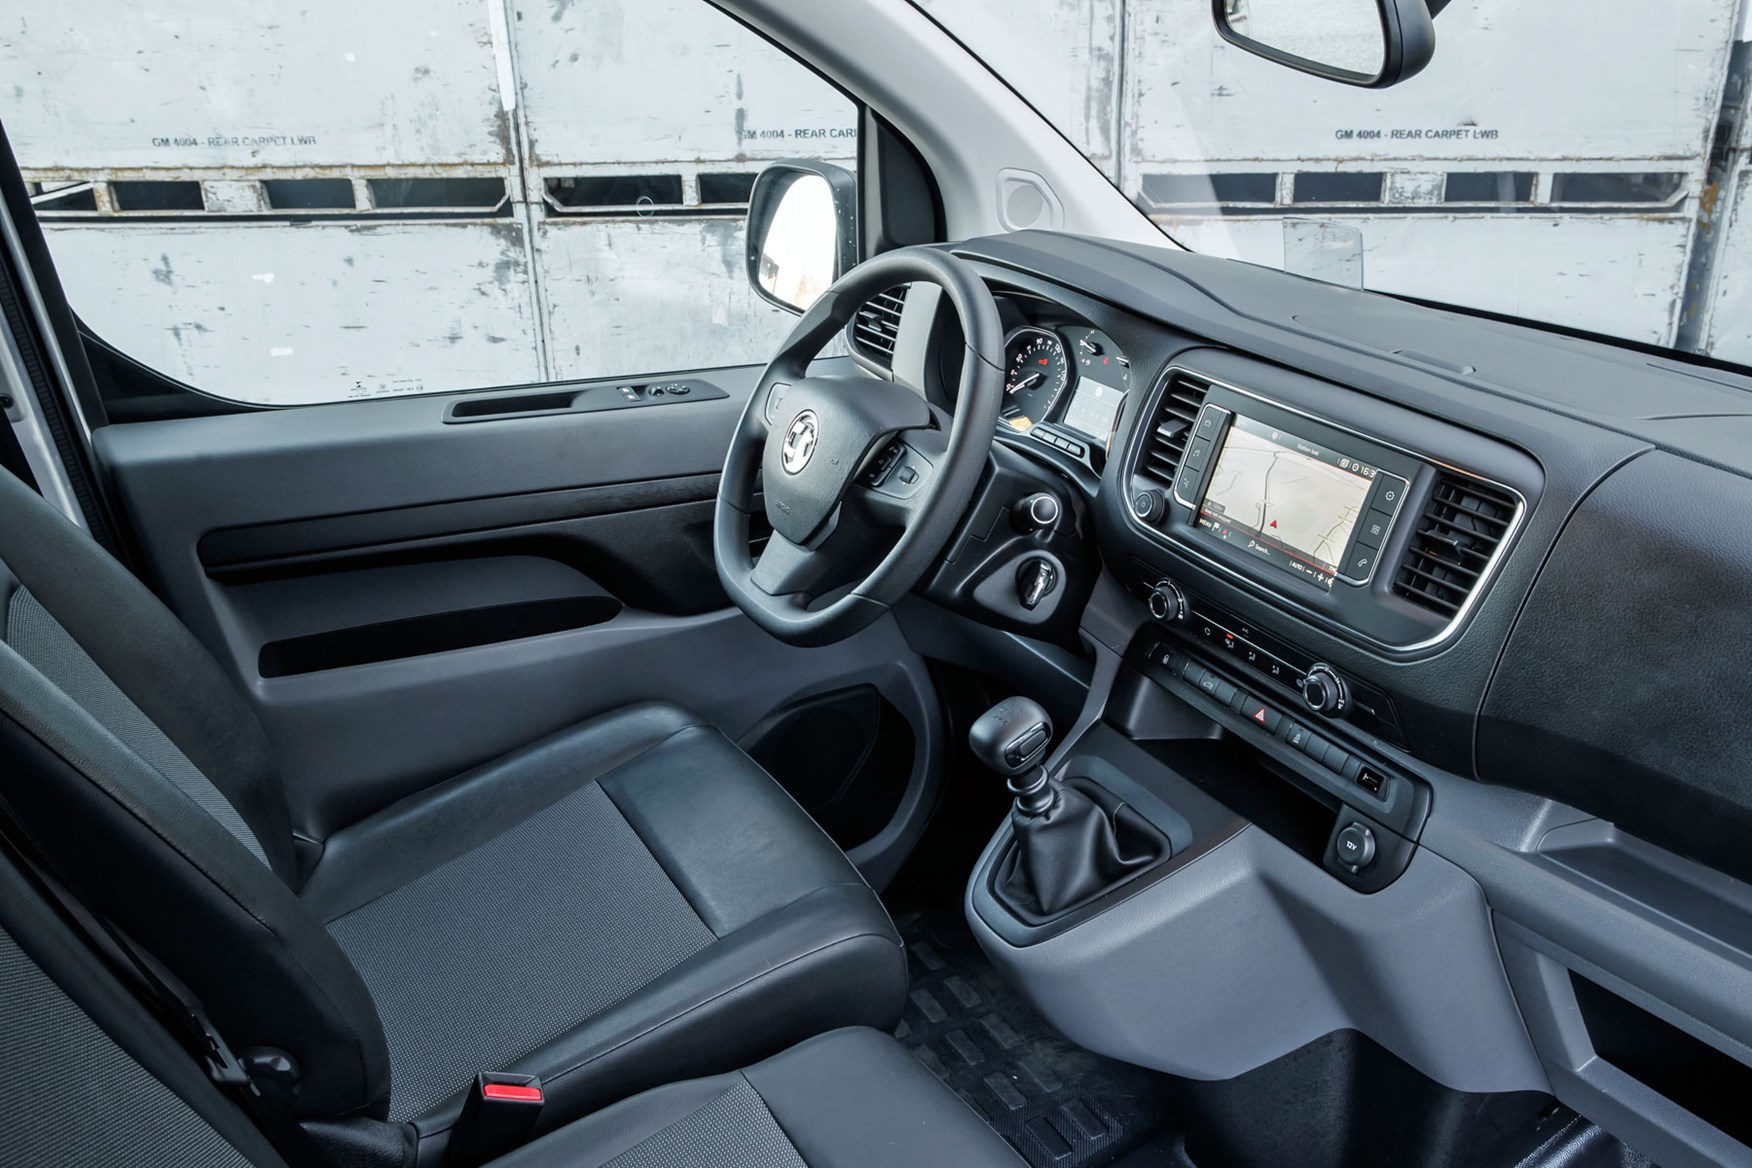 Vauxhall Vivaro review - cab interior